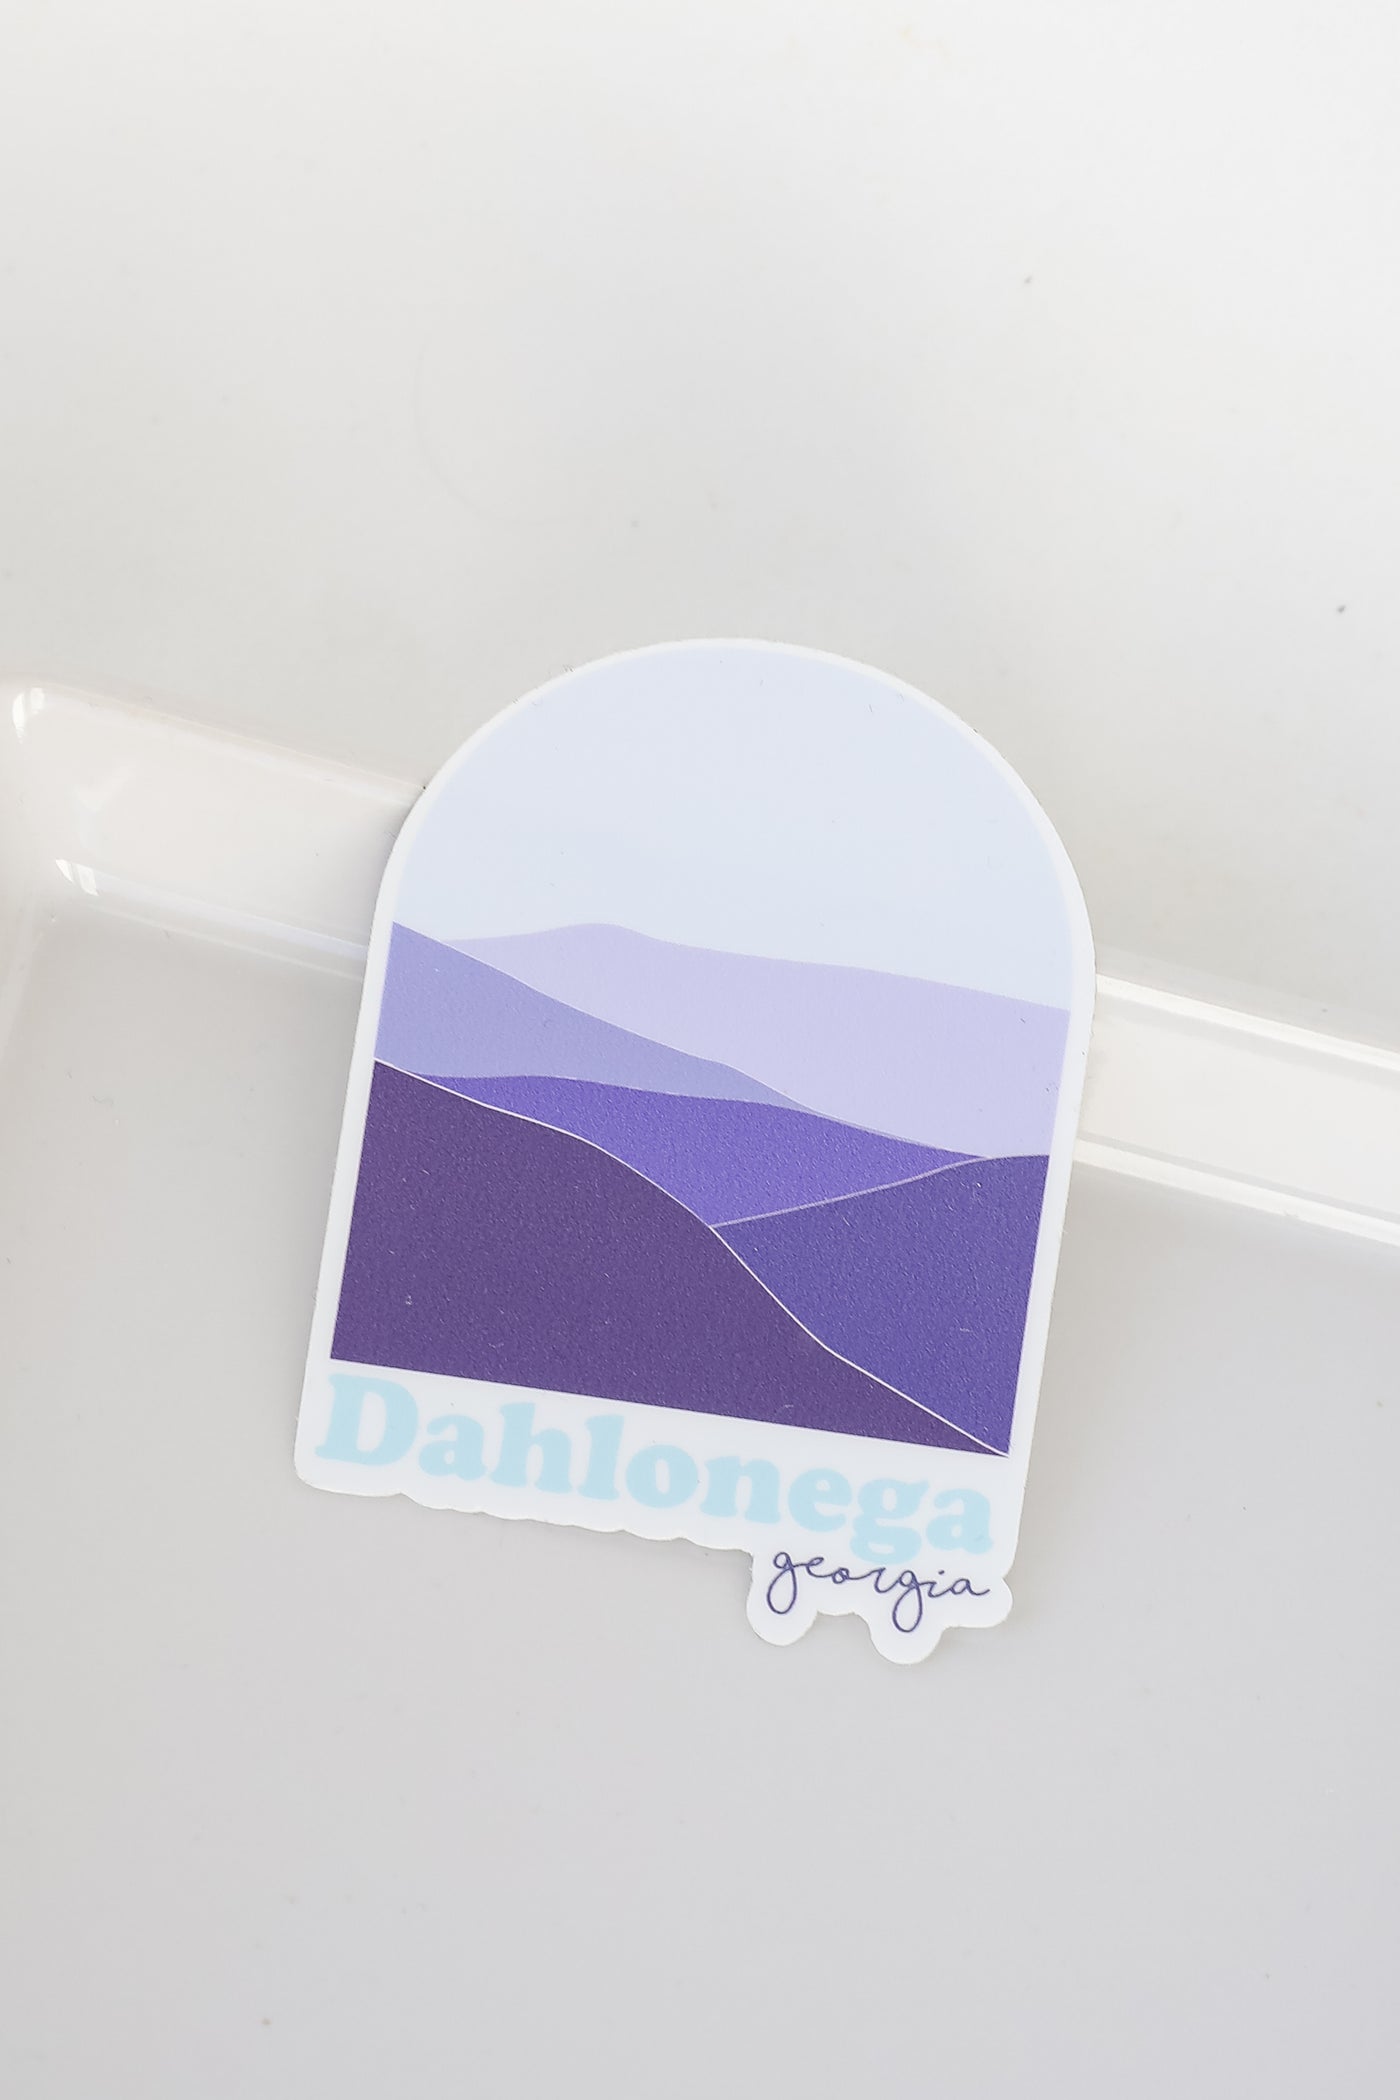 Round Dahlonega Georgia Mountain Sticker in purple